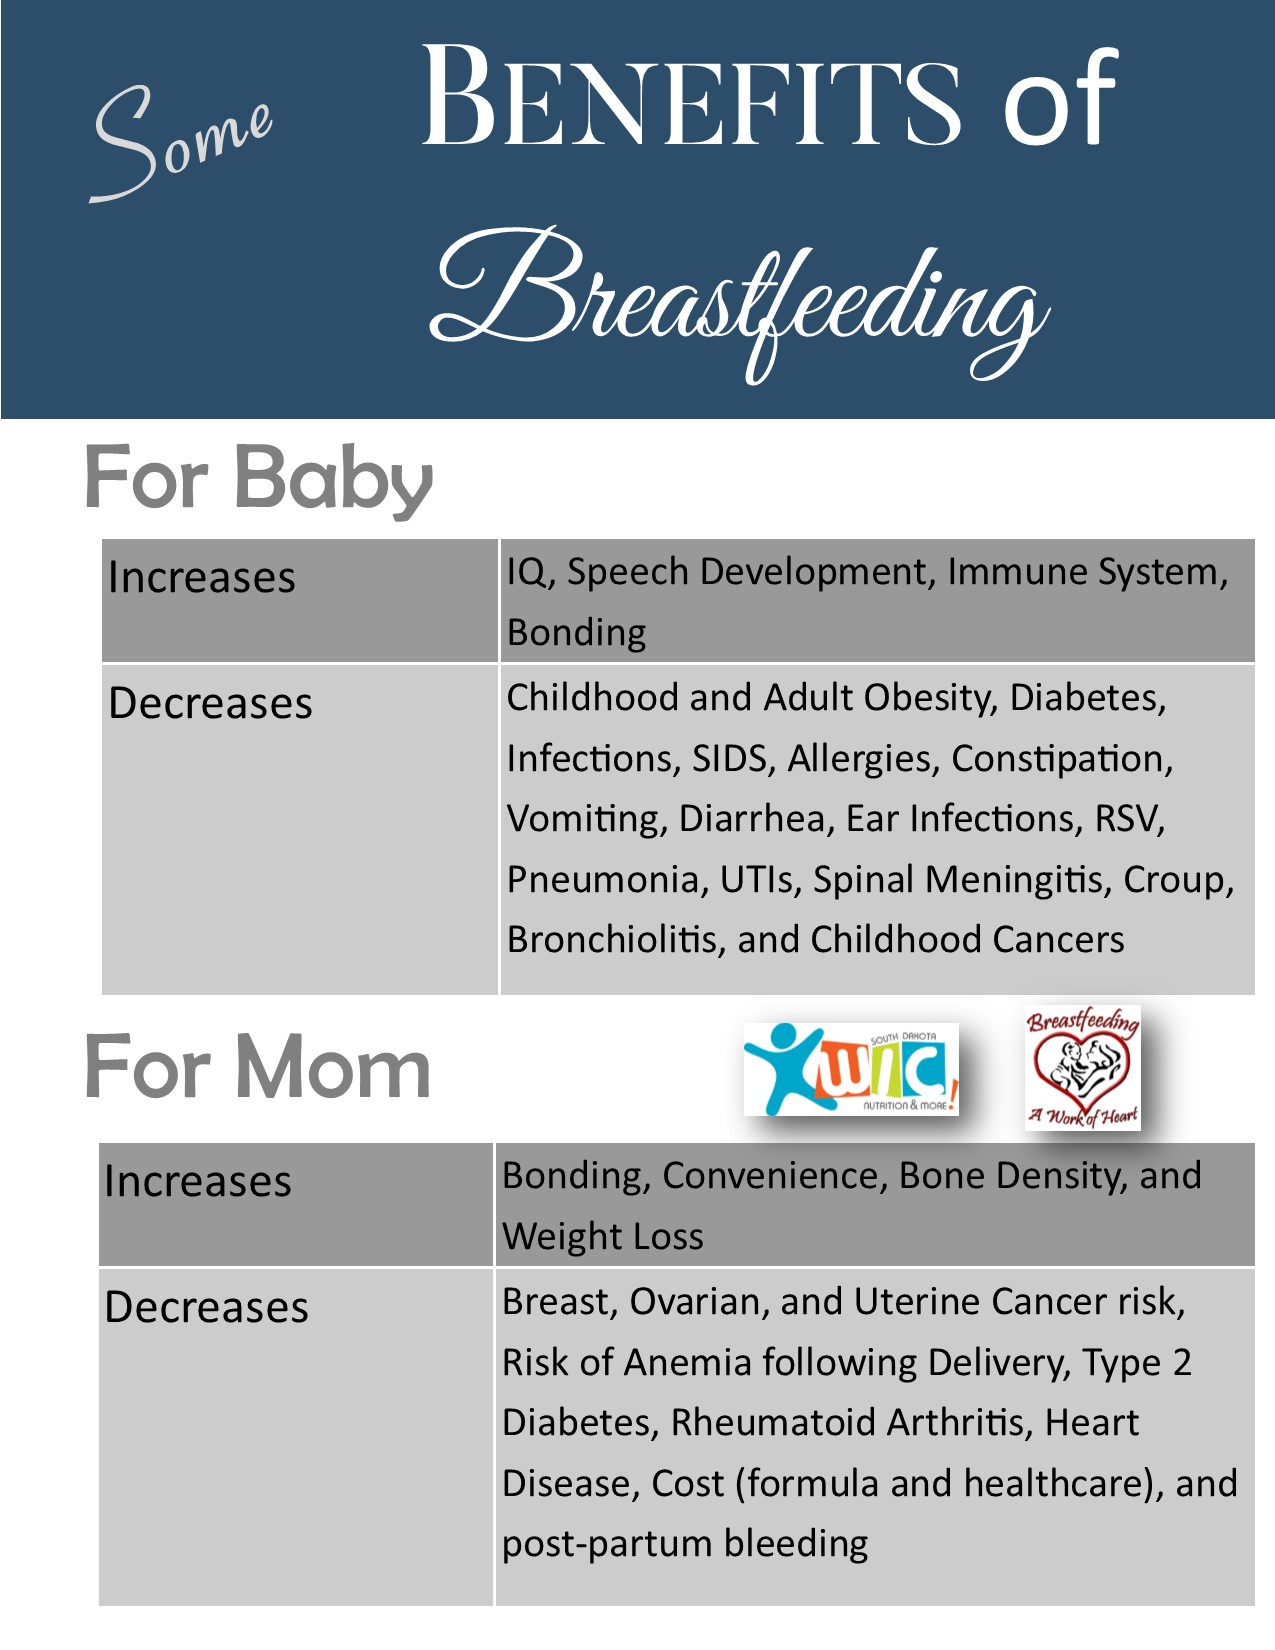 Benefits_of_Breastfeeding.jpg